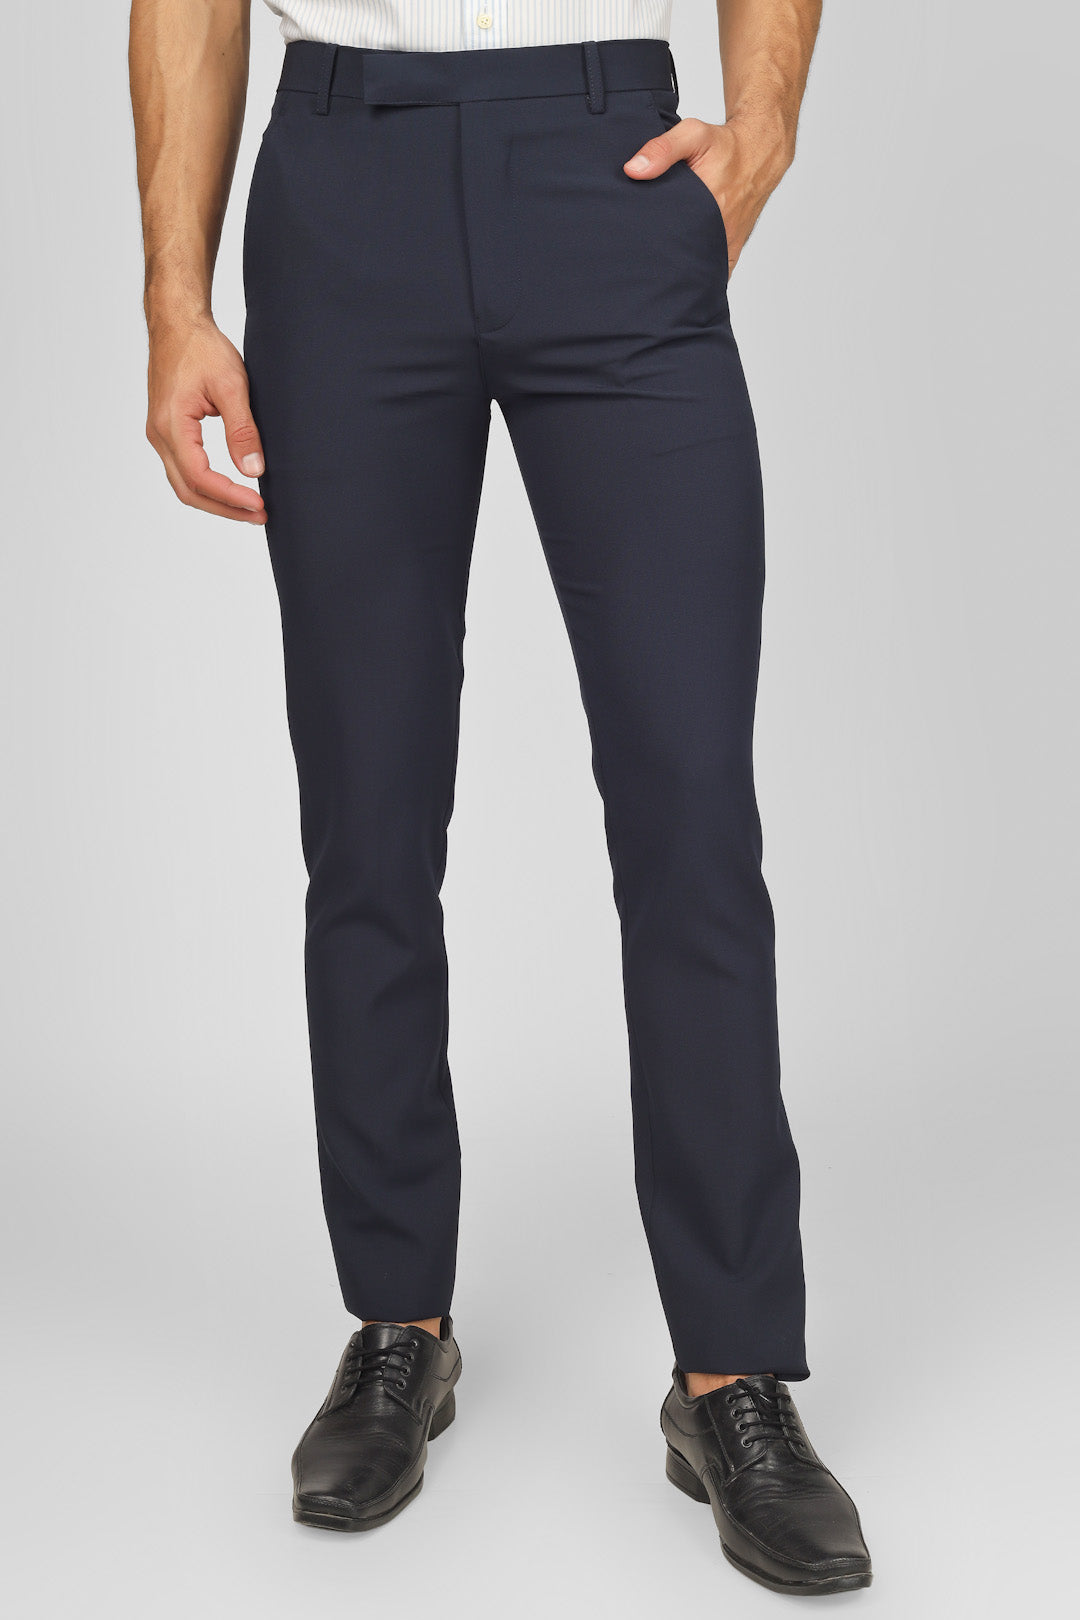 Lycra Formal Trousers for Men